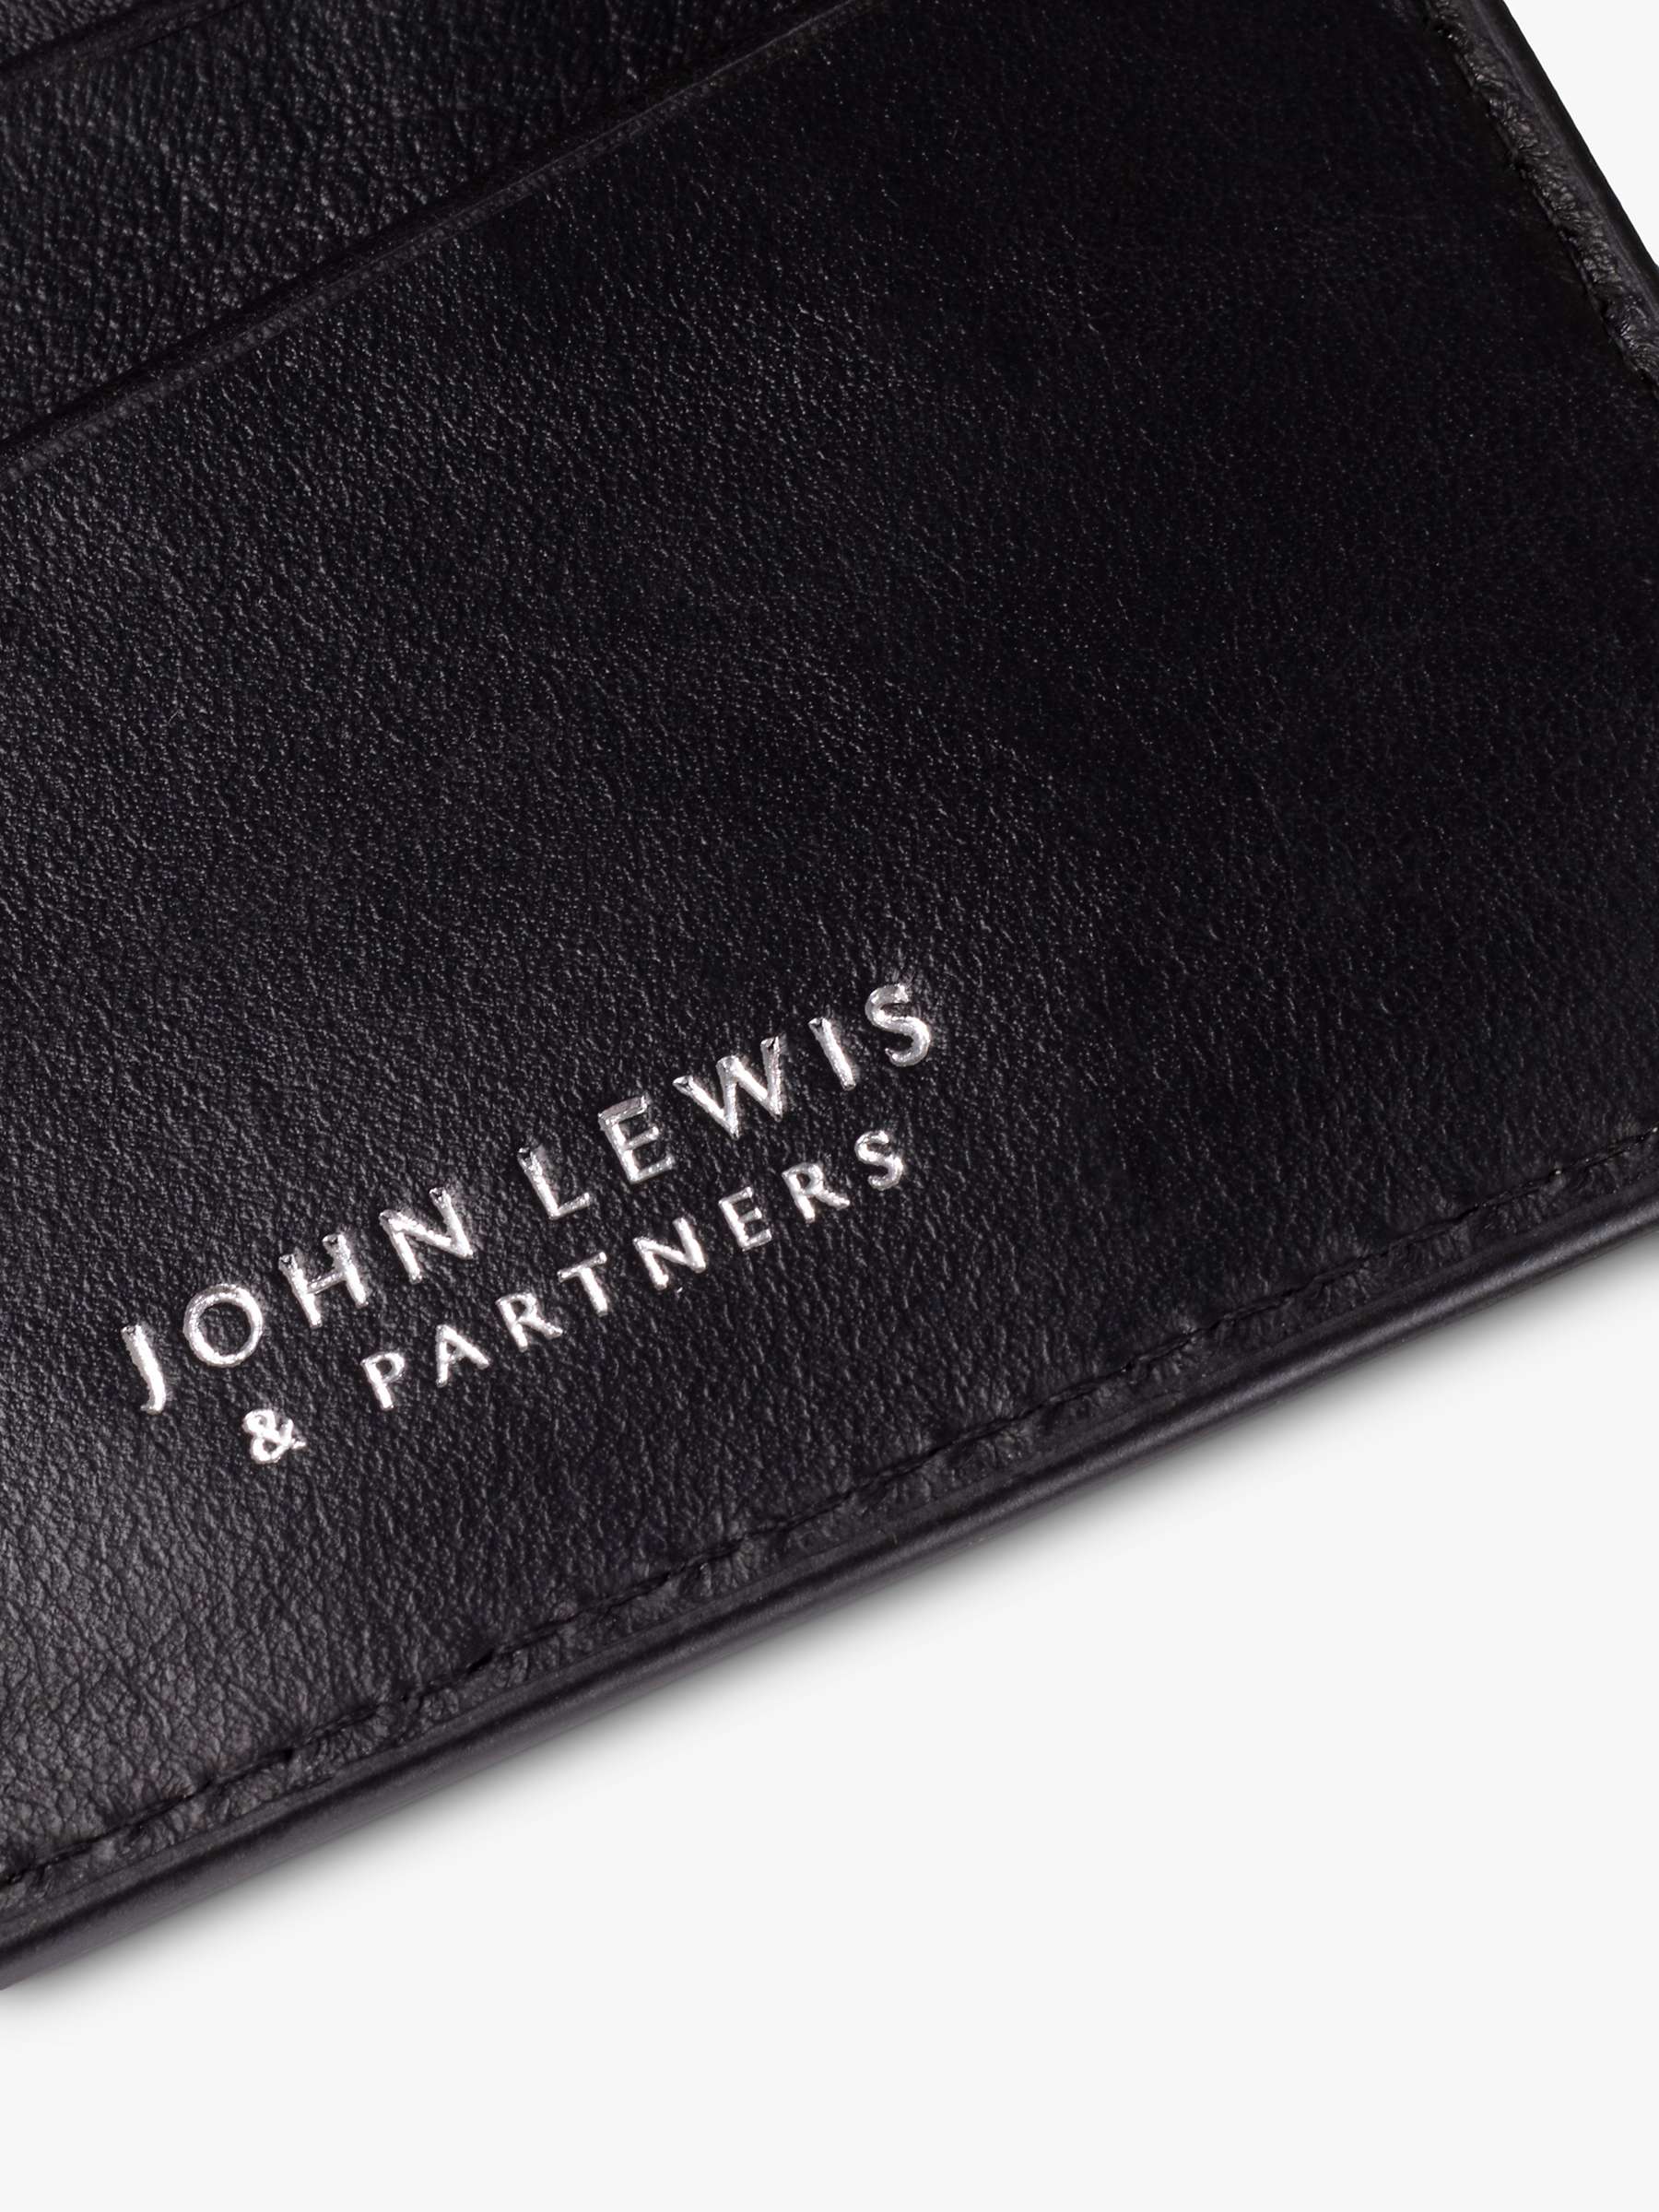 Buy John Lewis Vegetable Tanned Leather Bifold Wallet Online at johnlewis.com